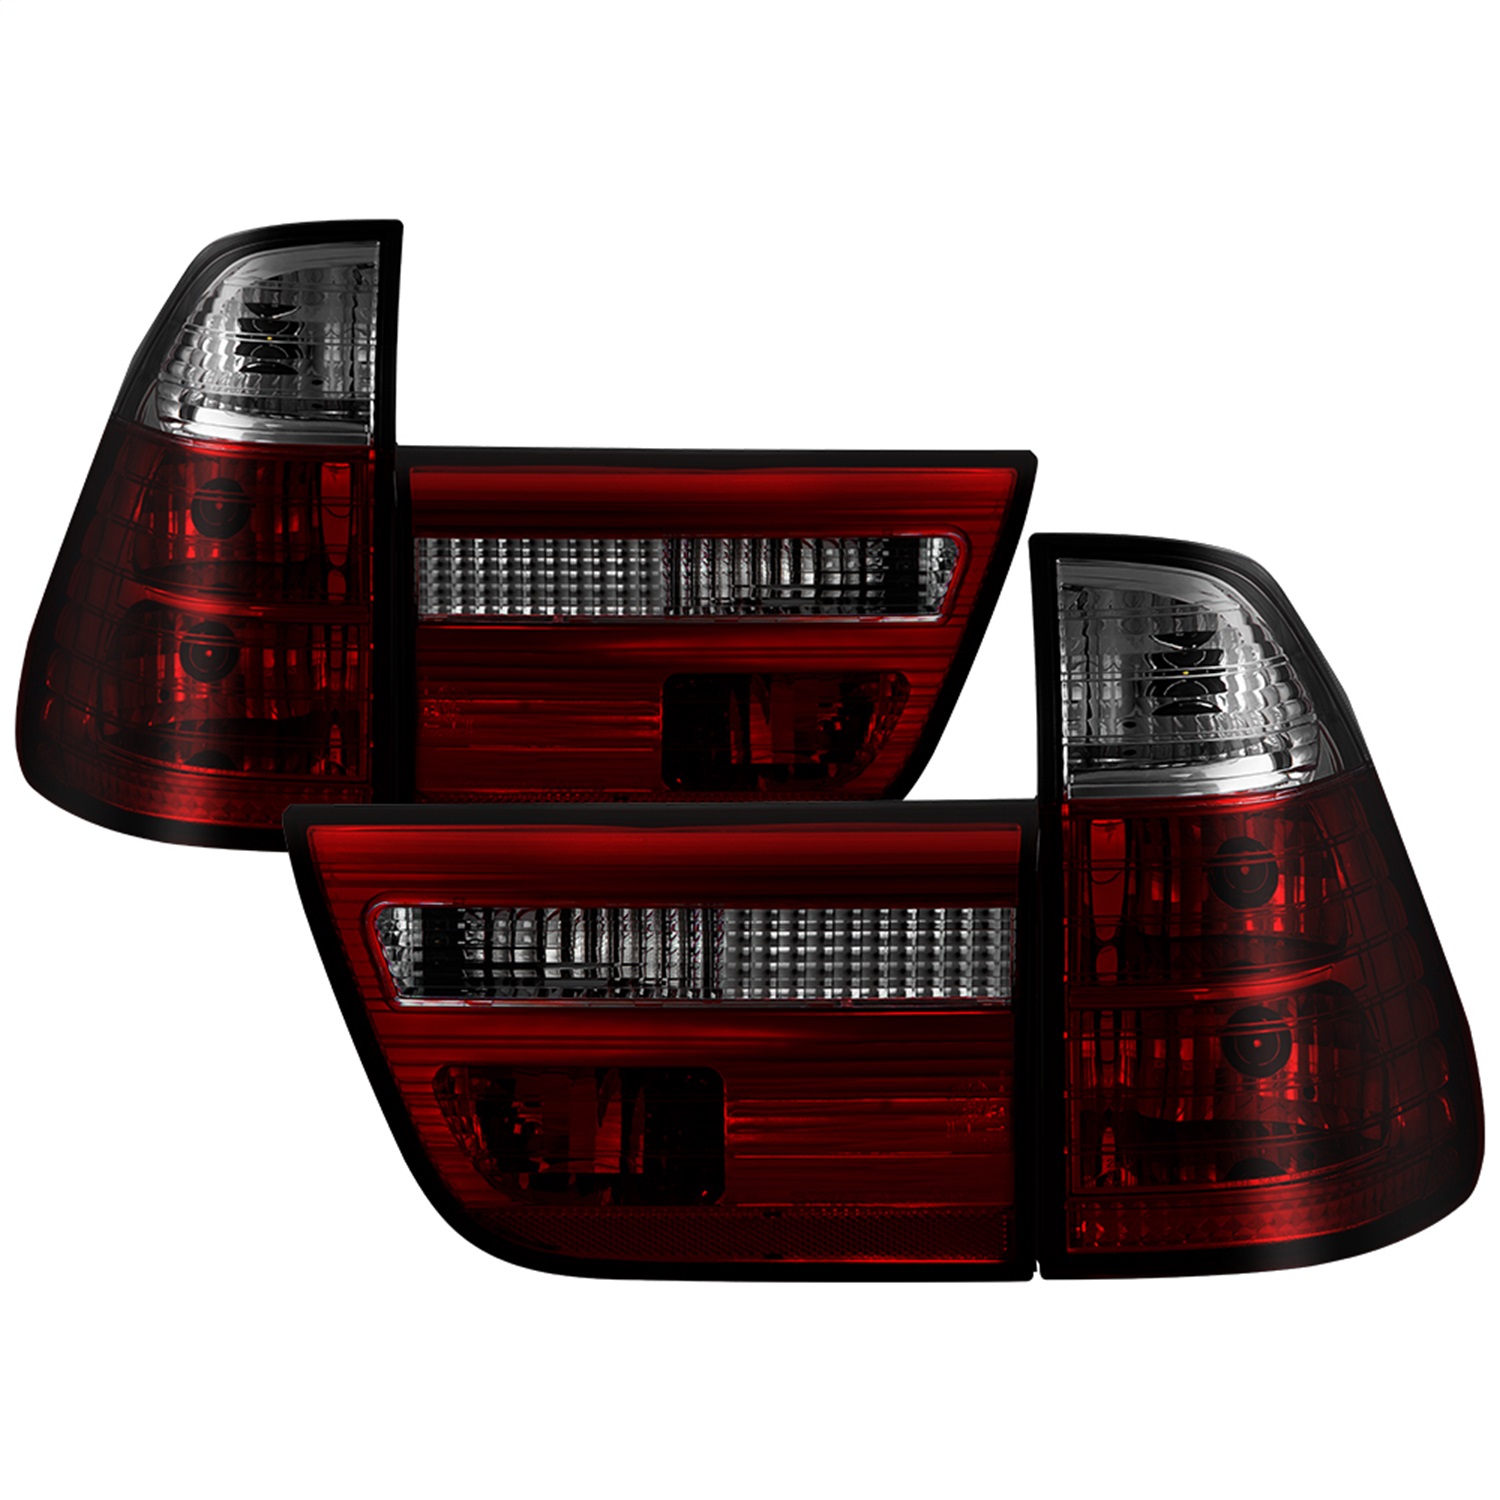 Spyder Auto 5000842 Euro Style Tail Lights Fits 00-06 X5